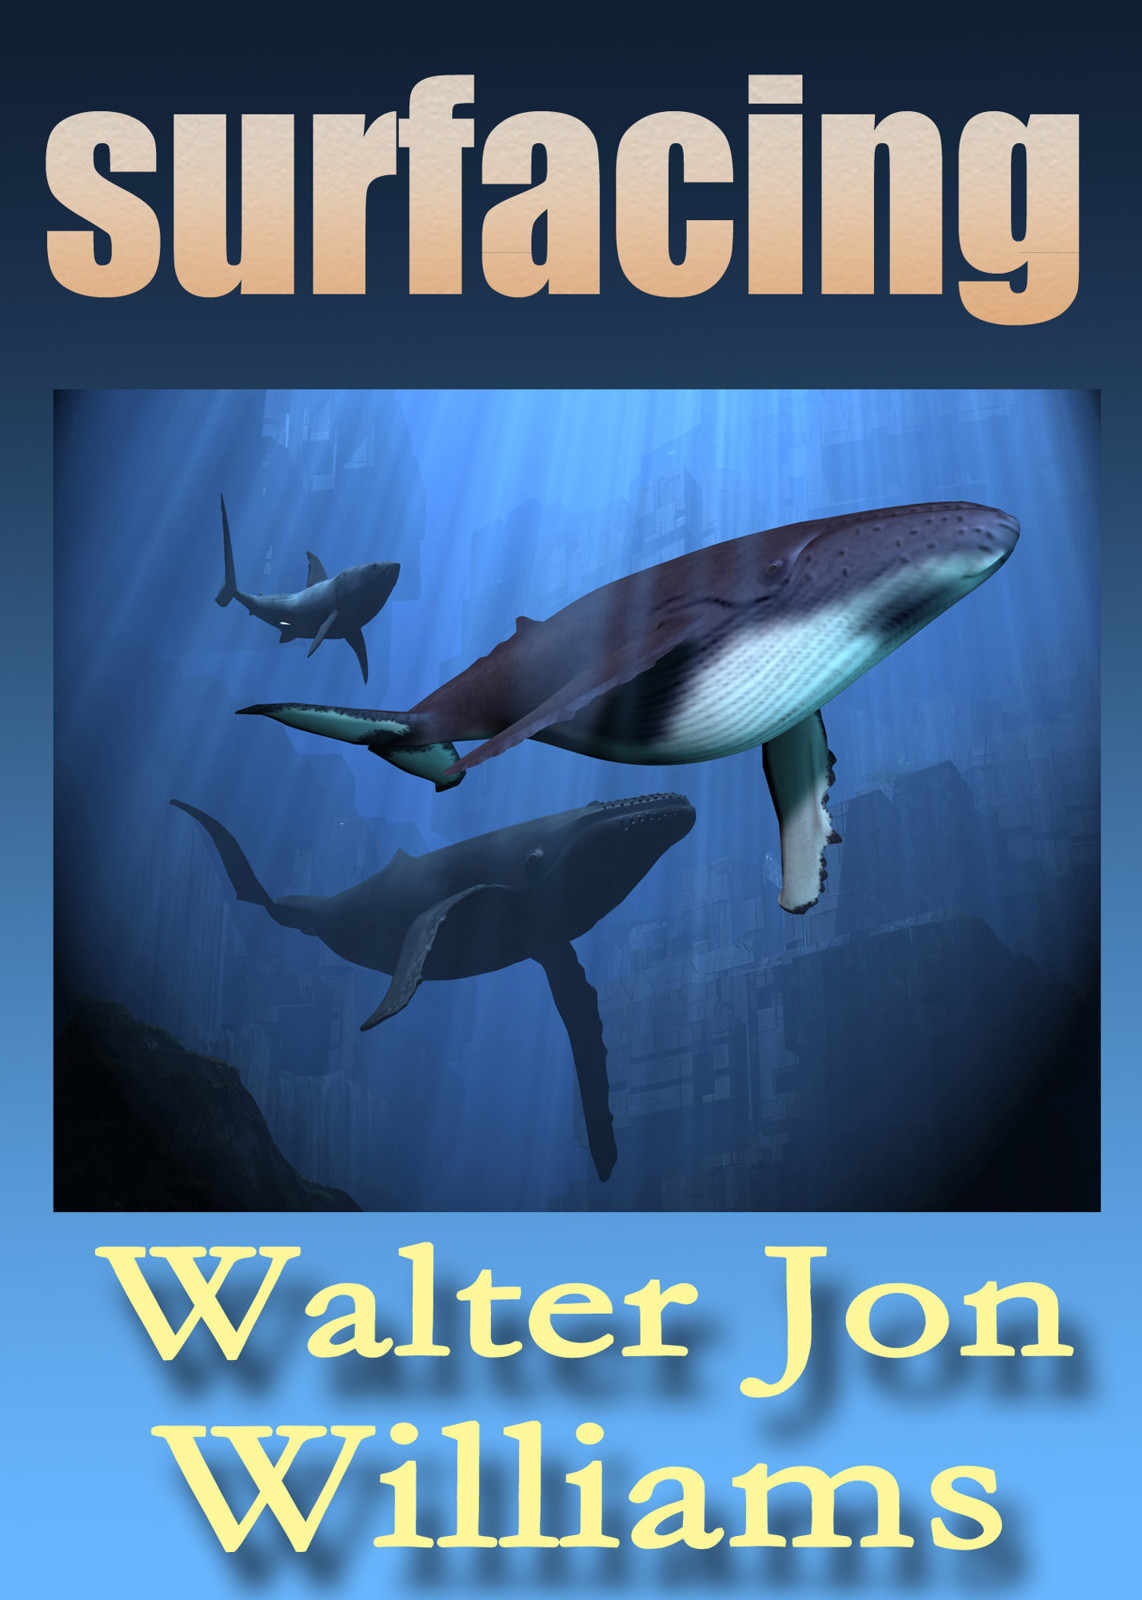 Surfacing by Walter Jon Williams